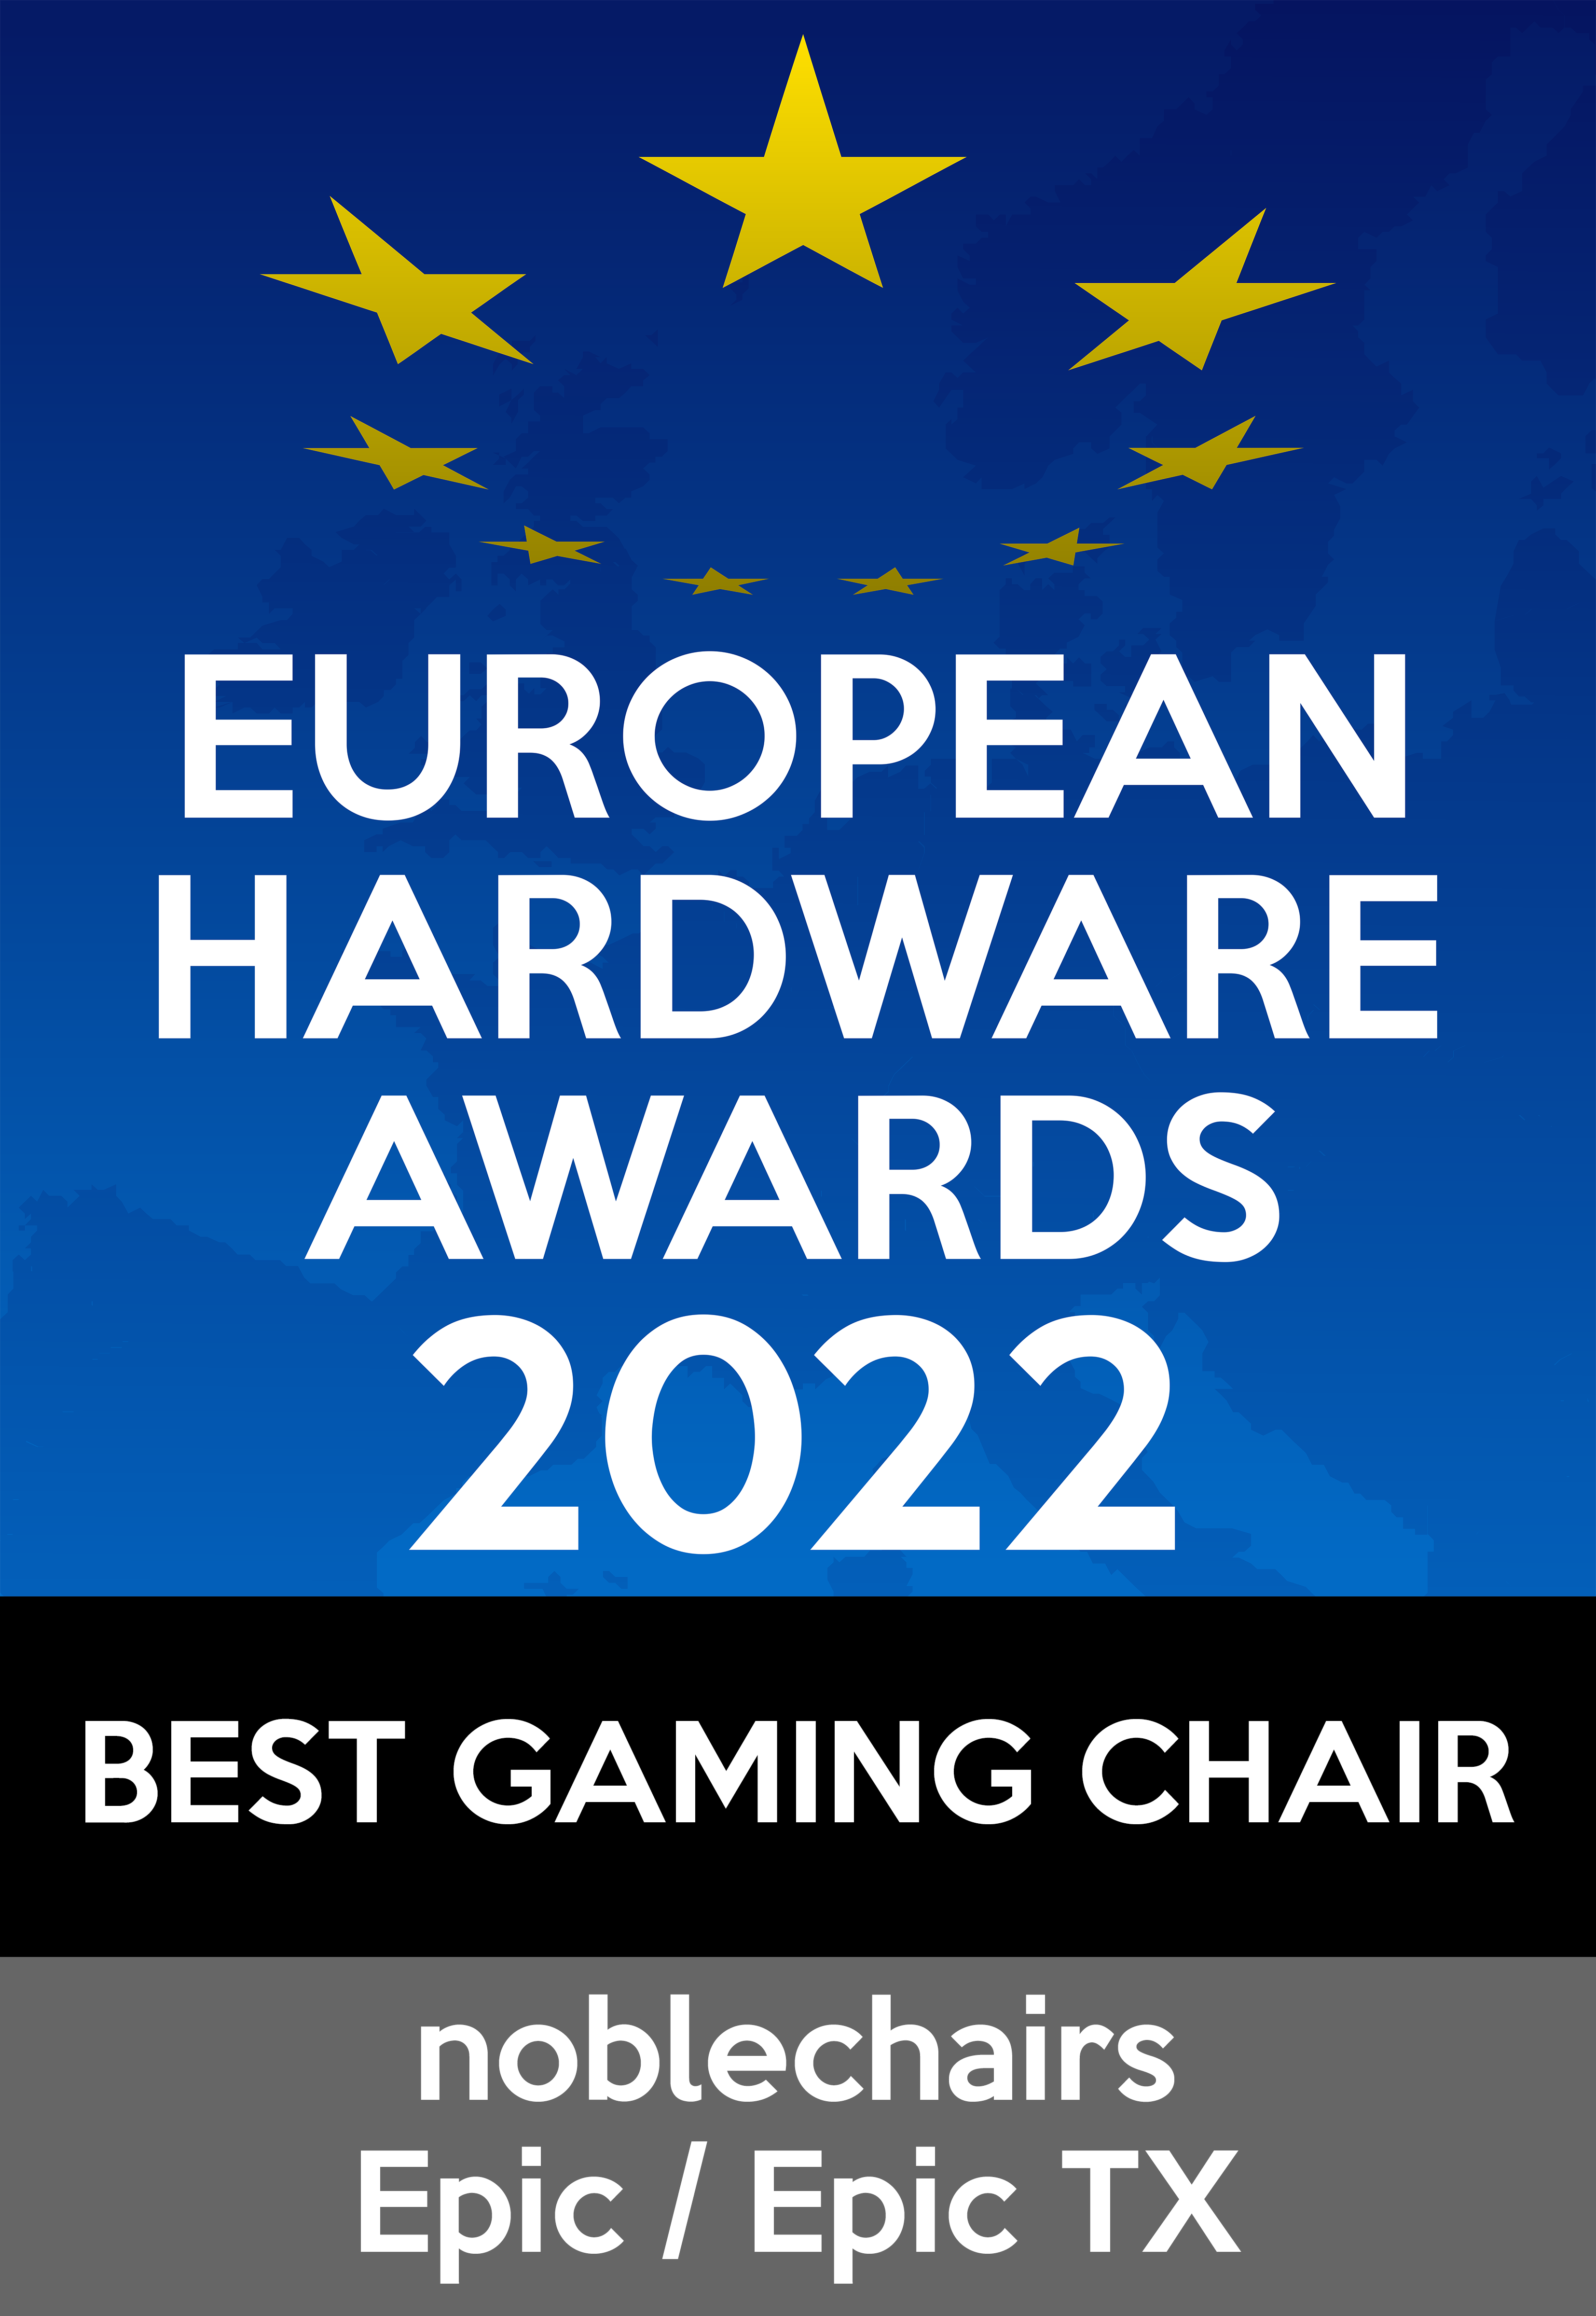 noblechairs European Hardware Awards 2022